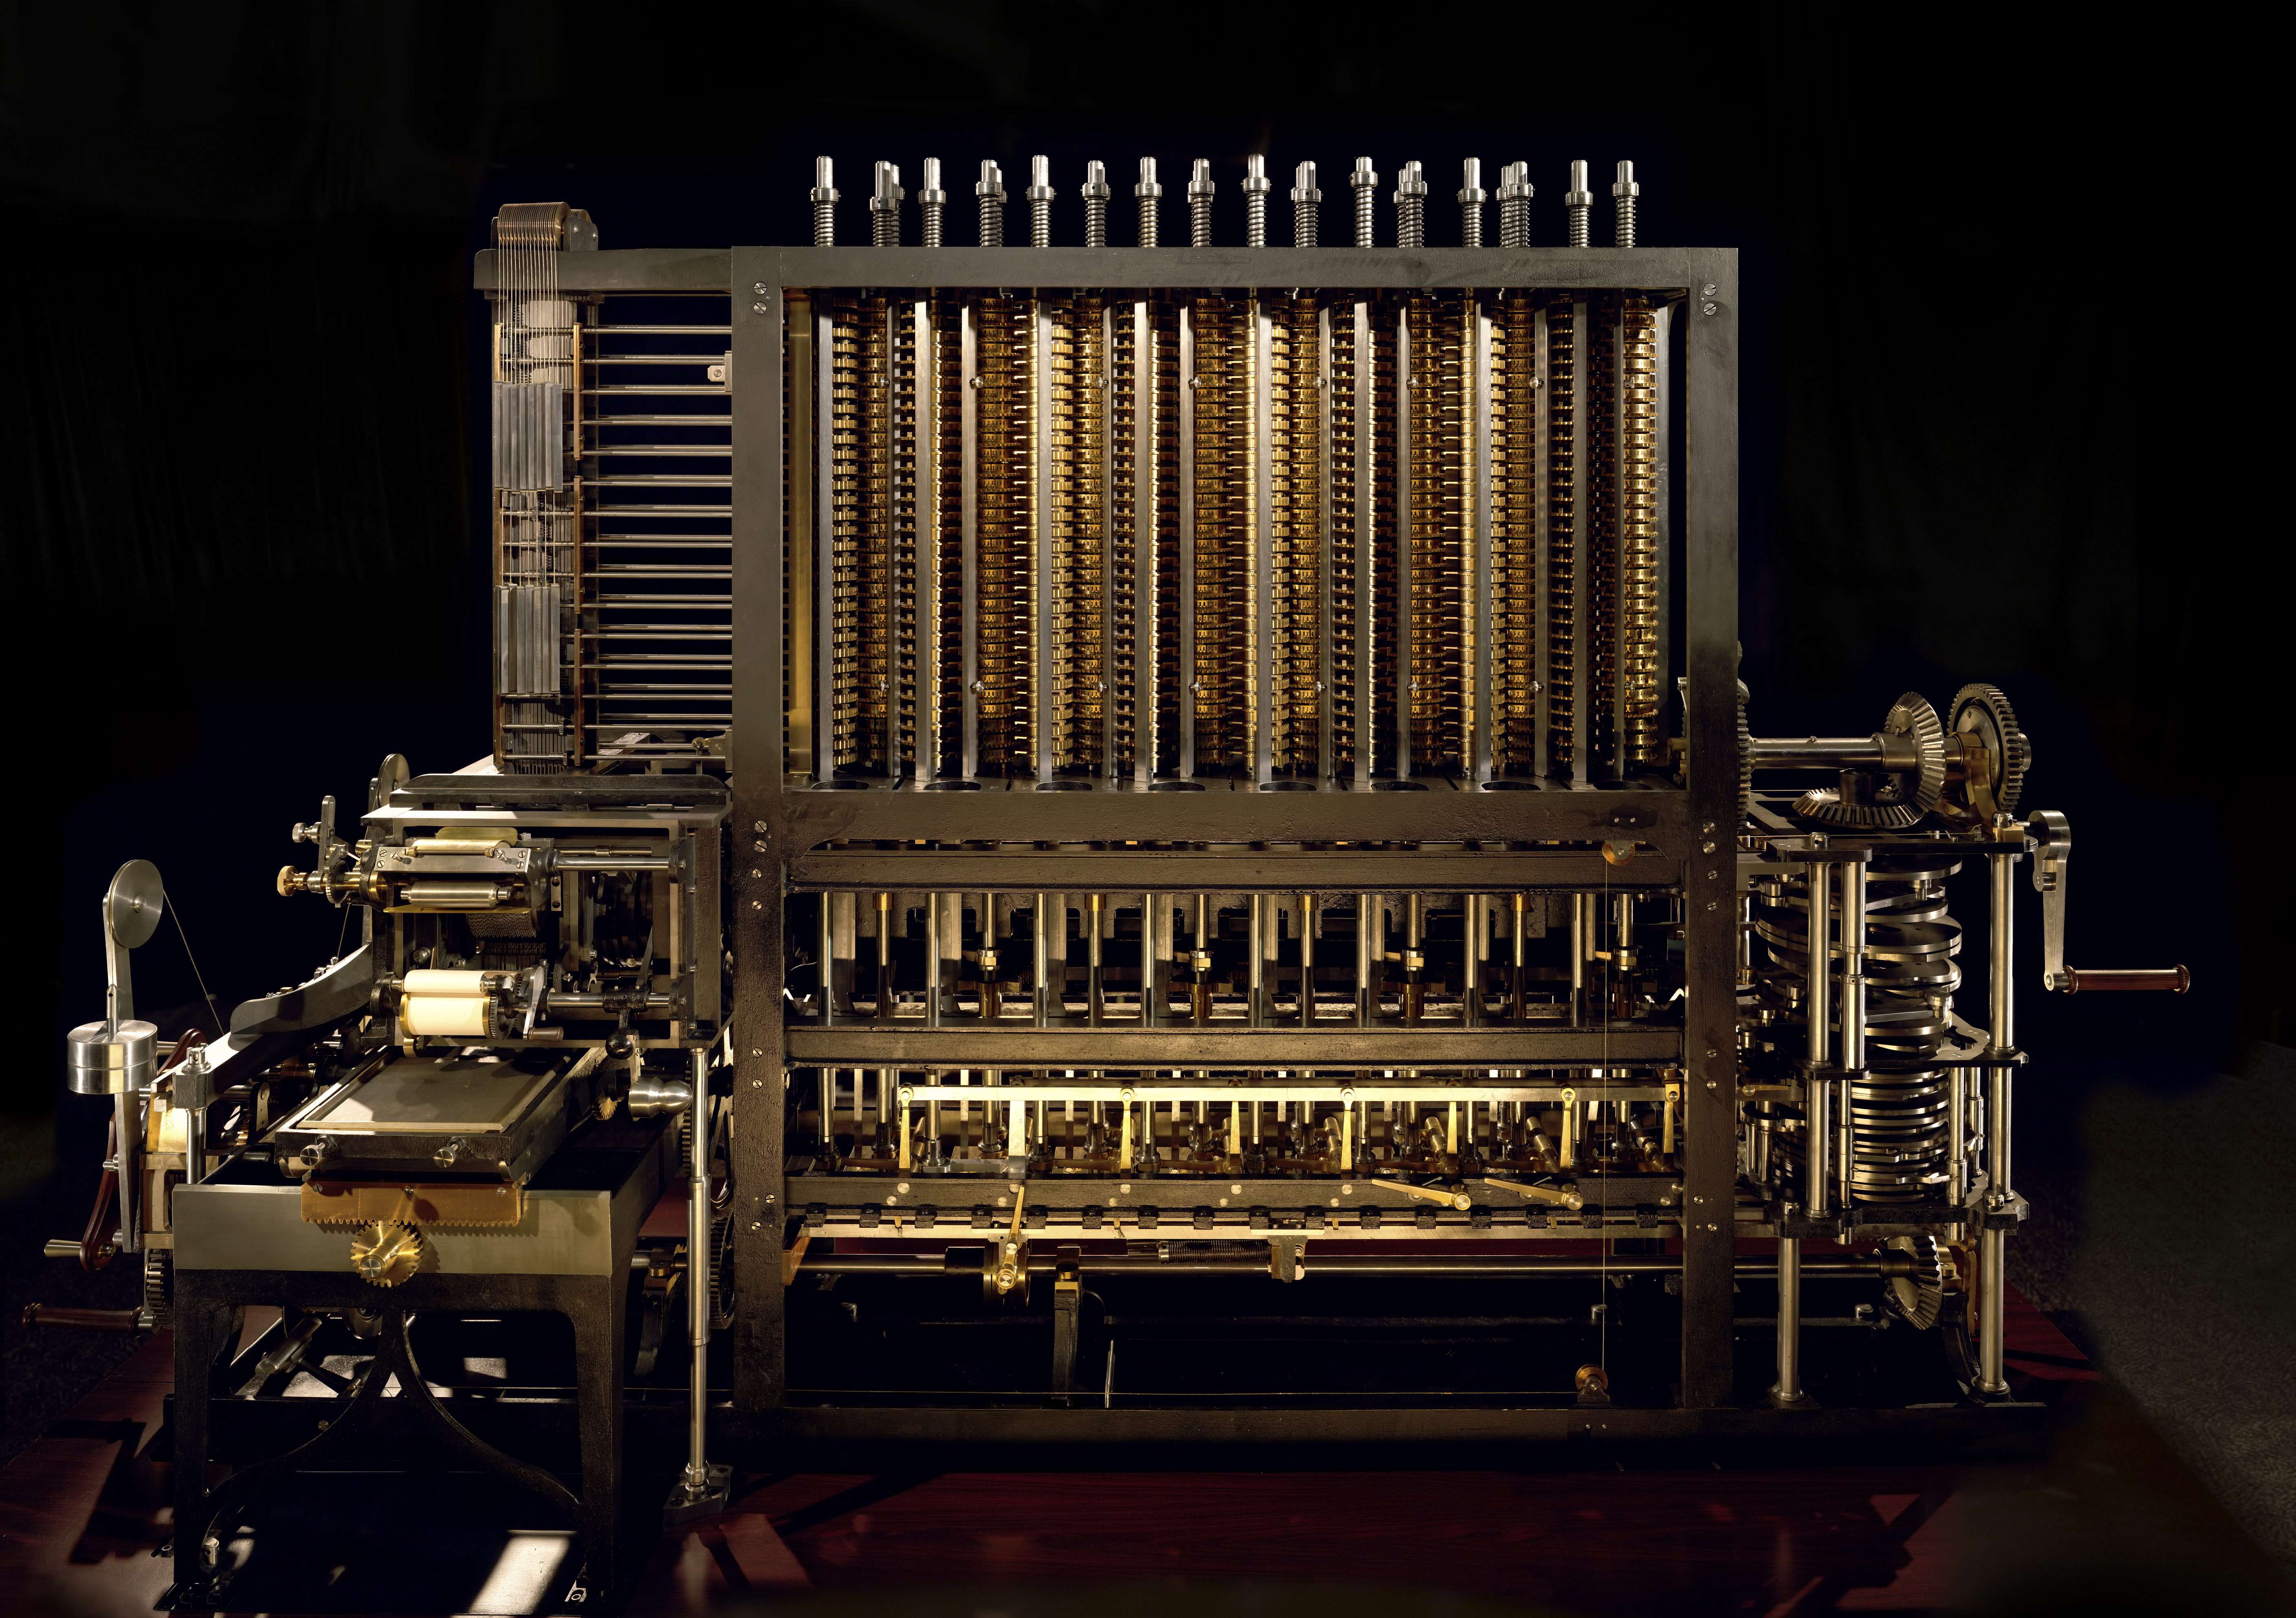 Секунд пк. Разностная машина Чарльза Бэббиджа 1822. Чарльз Бэббидж аналитическая машина. Чарльз Бэббидж разностная машина аналитическая. Аналитическая машина ада Лавлейс.